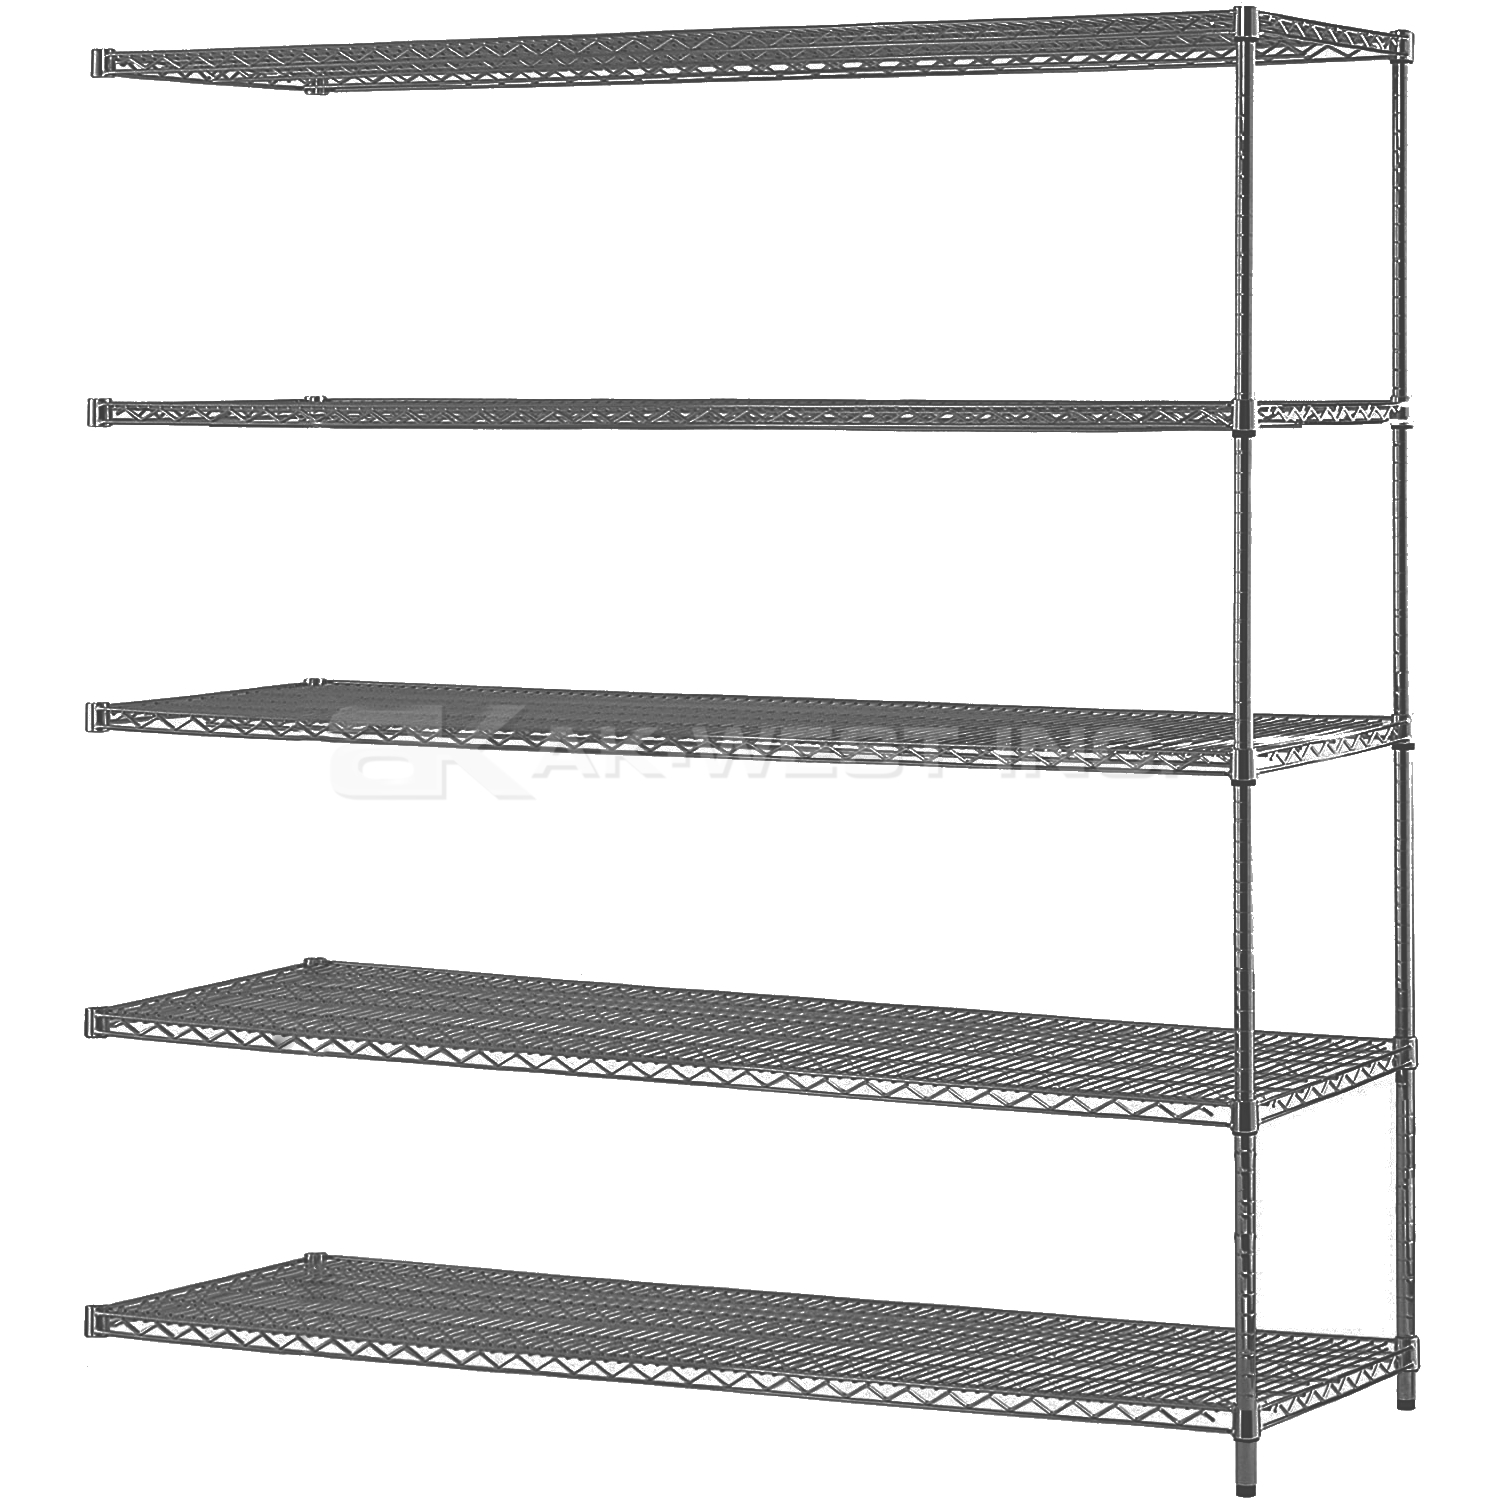 Grey, 24"D x 72"W x 63"H, 6 Shelf, Wire Shelving Adder Kit